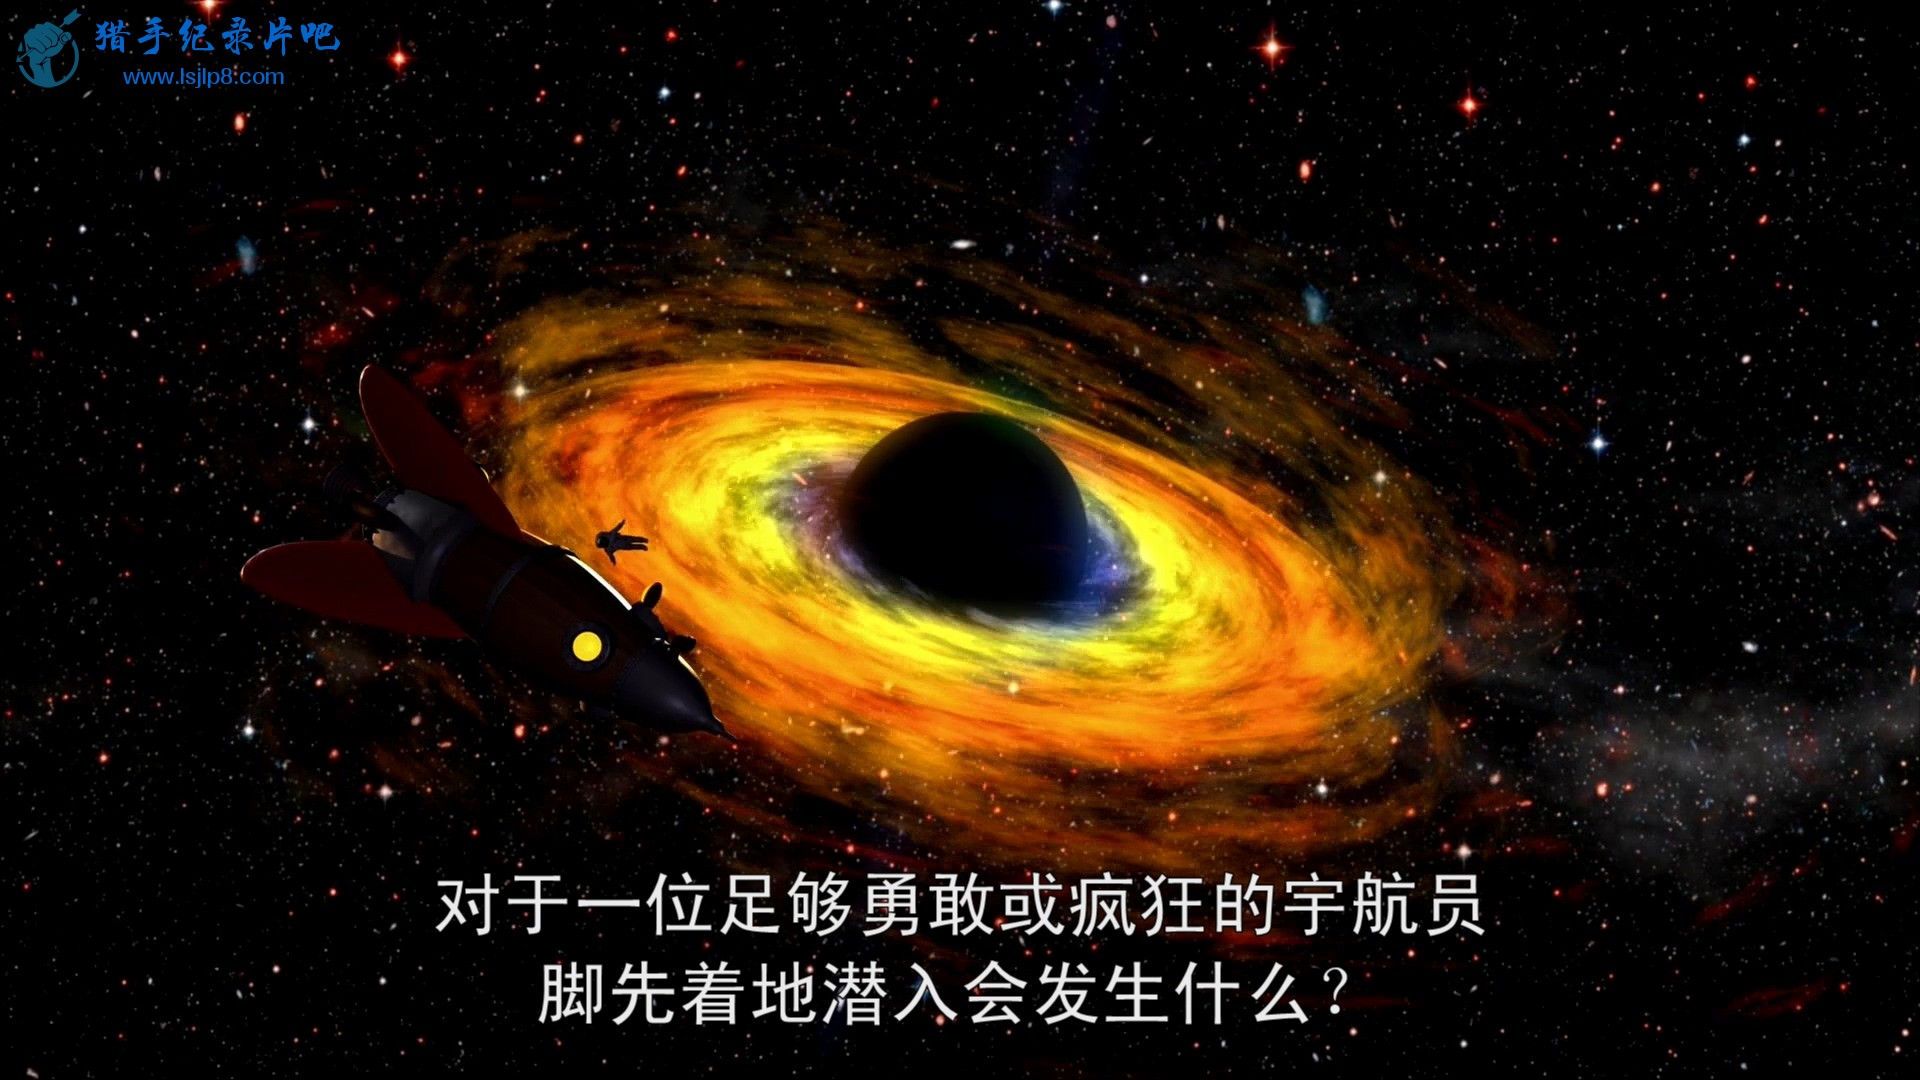 The.Science.Of.Interstellar.2015.1080p.BluRay.x264-HANDJOB.mkv_20200516_100458.719.jpg